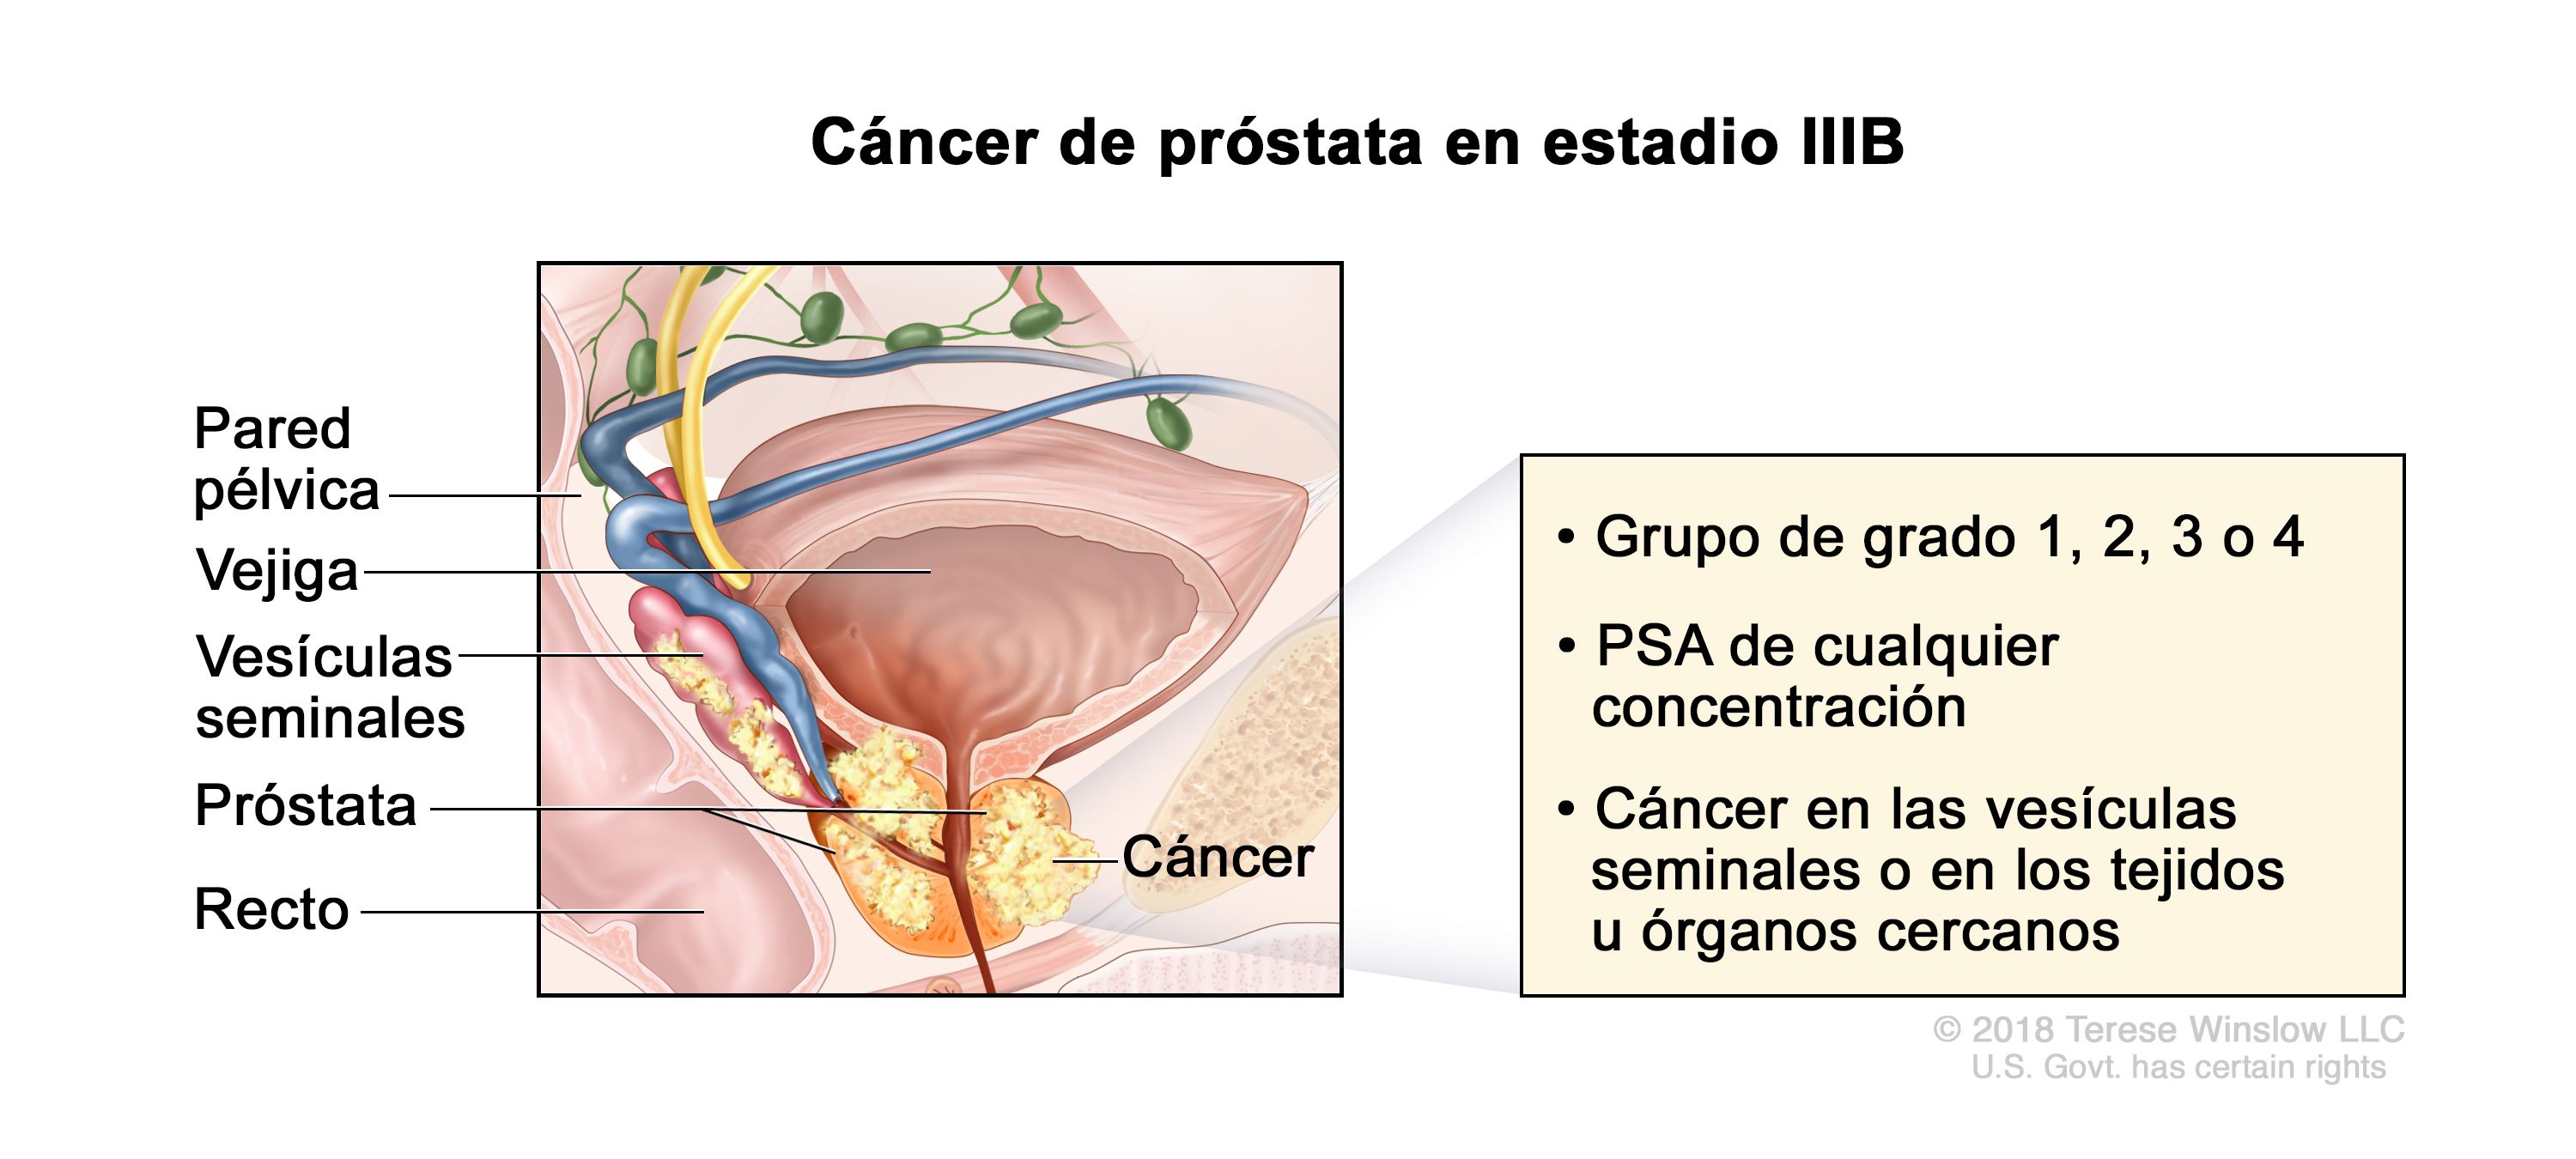 cáncer de próstata grado 4 esperanza de vida